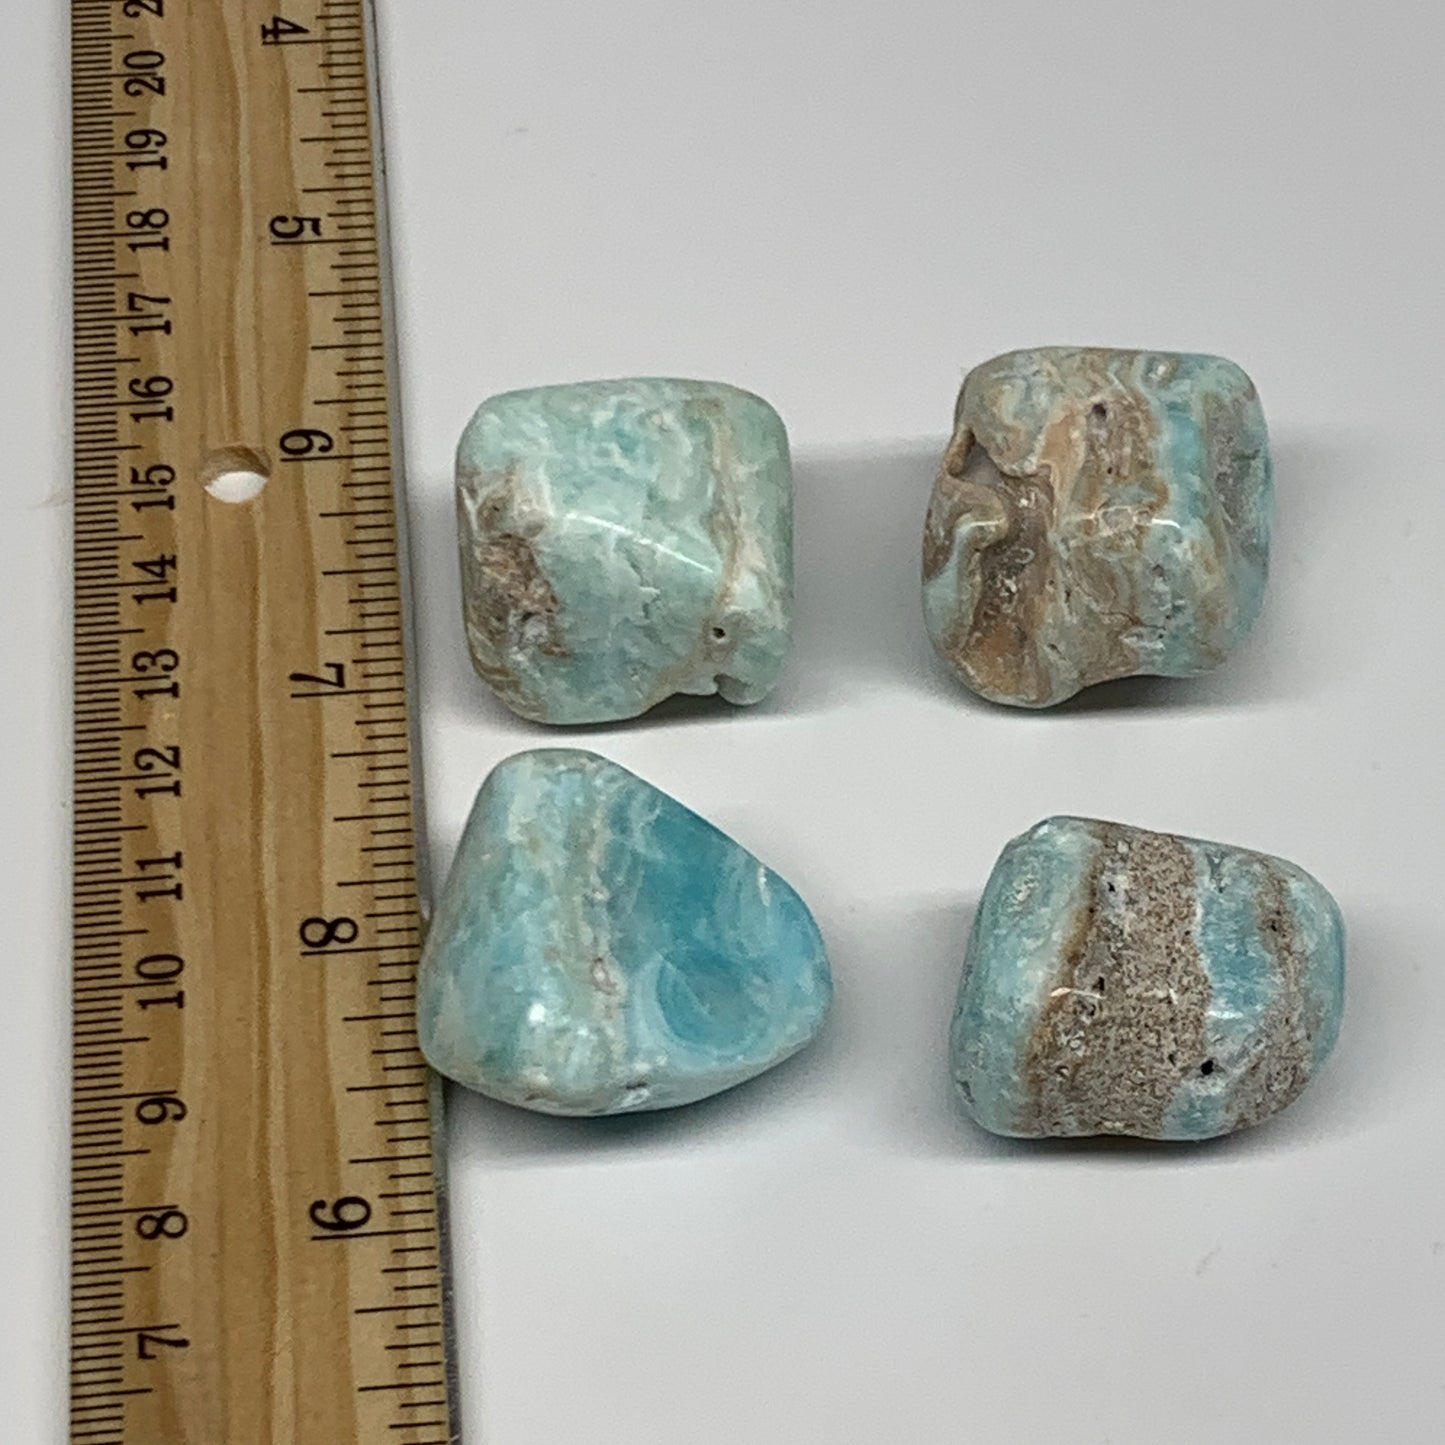 100.2g, 1"-1.2", 4pcs, Blue Aragonite Tumbled Stones @Afghanistan, B26951